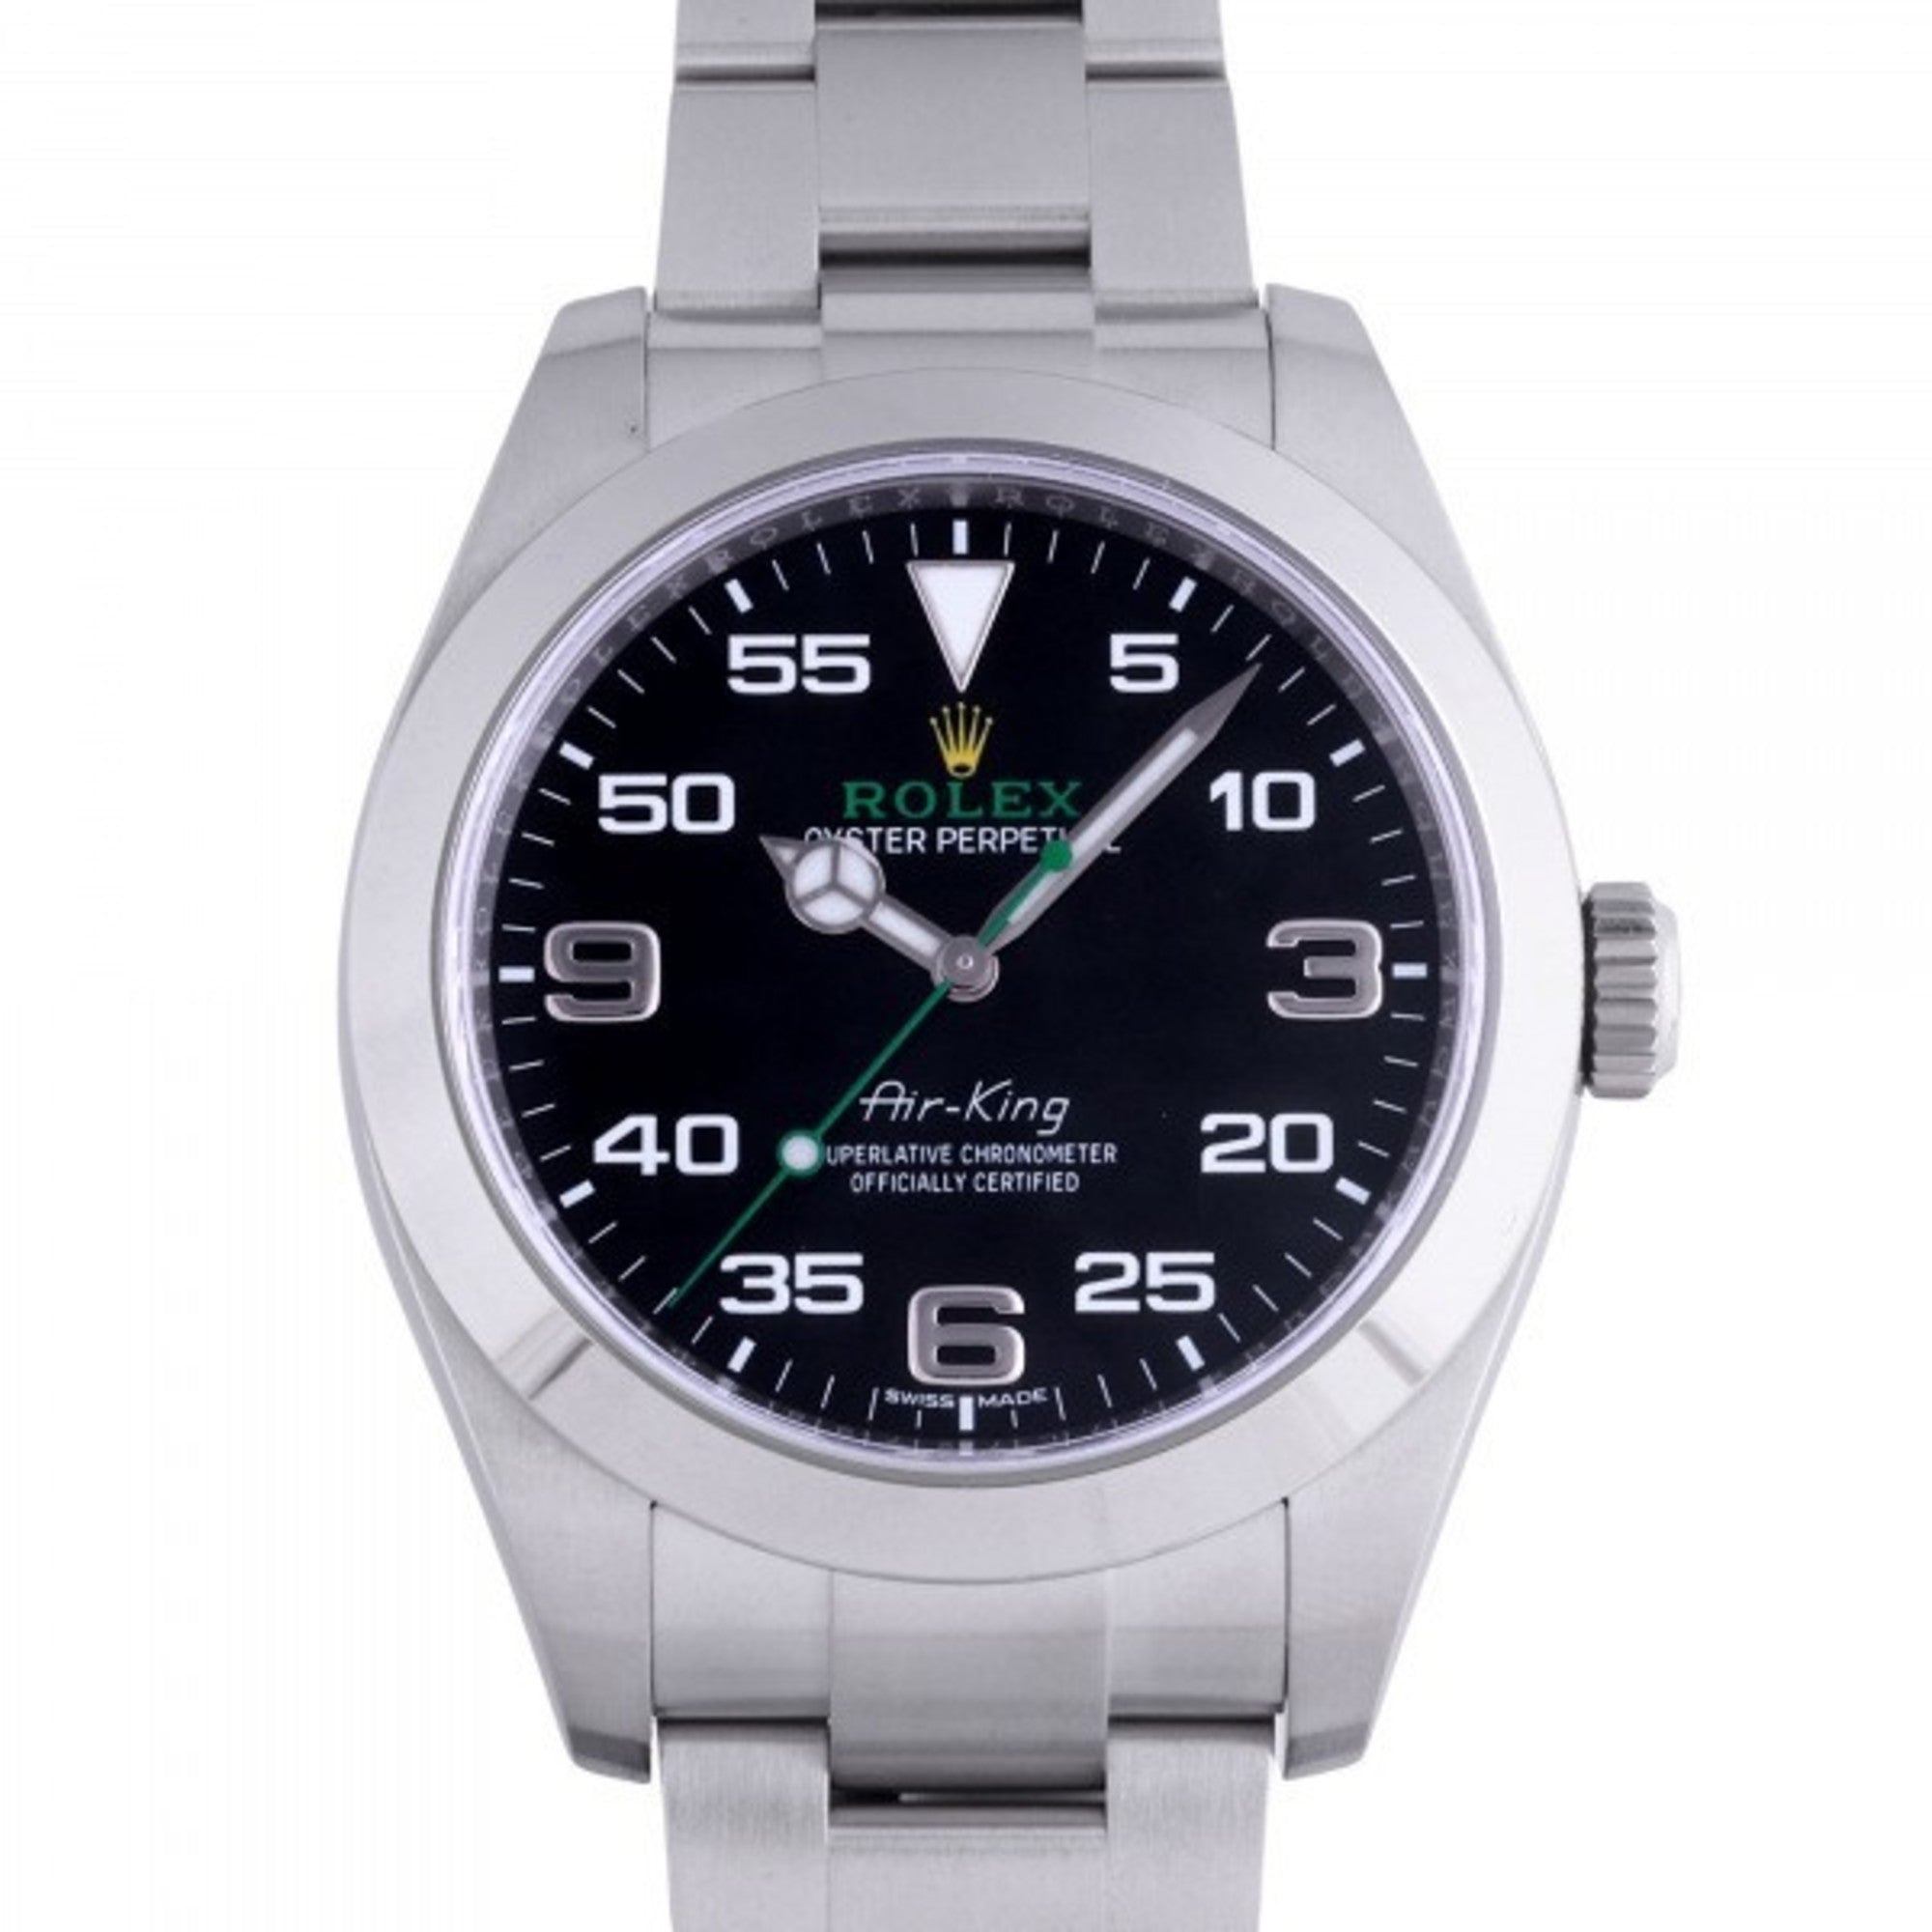 image of ROLEX Air King 116900 black dial watch men